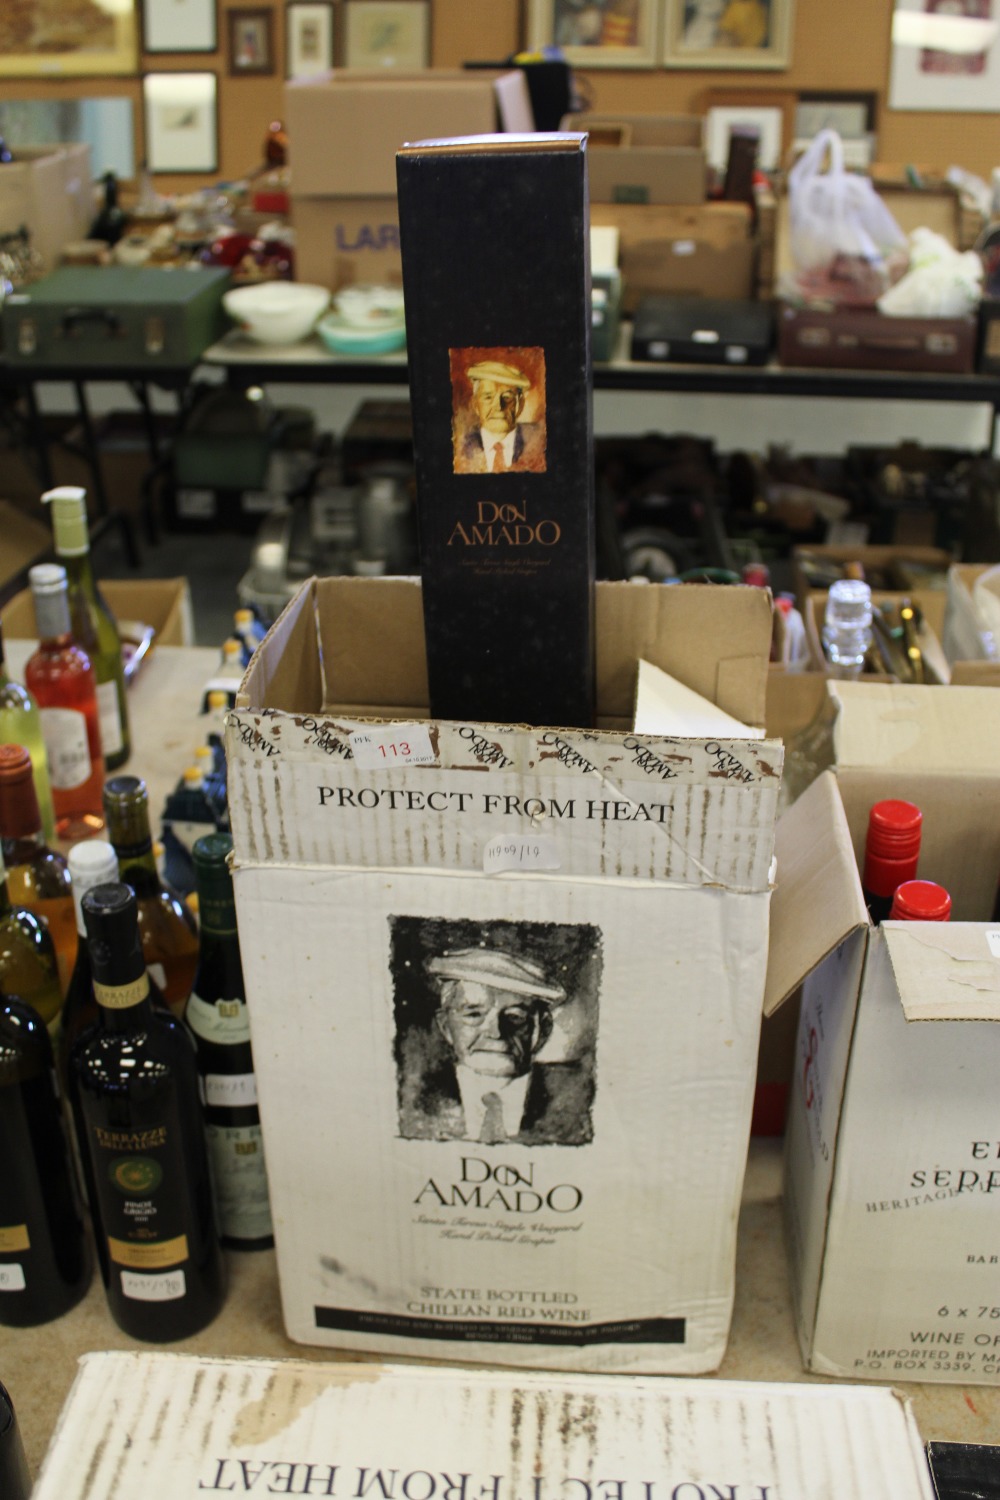 Four bottles of Torreon de Paredes 'Don Amado' Chilean blended red wine, 1998 vintage (each bottle